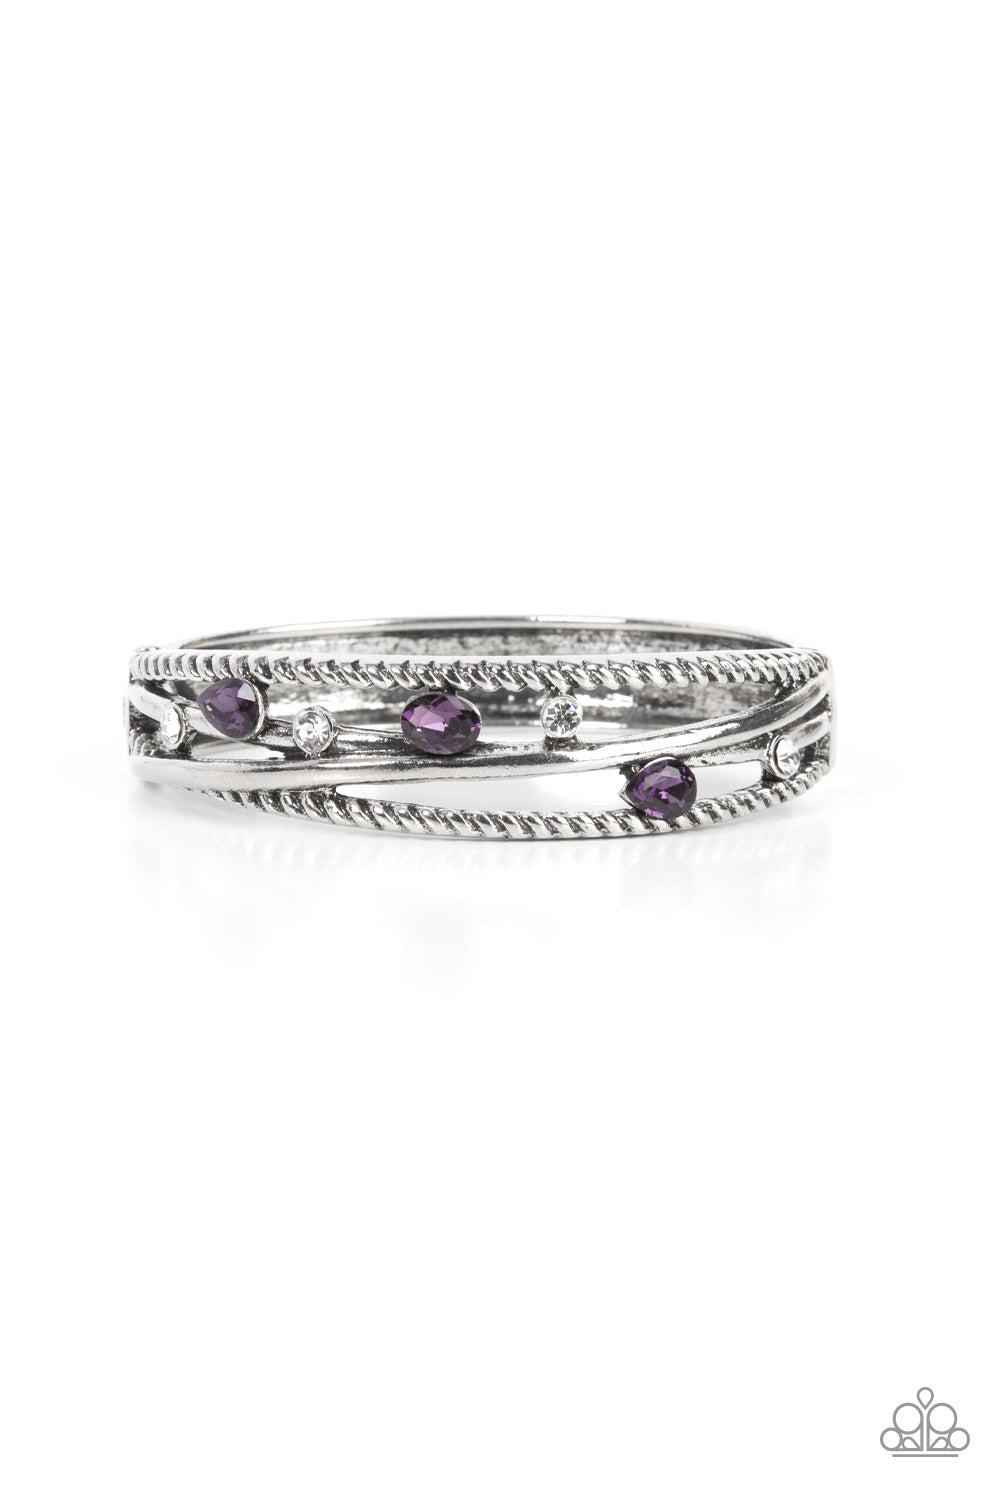 Bonus Bling Purple Bracelet - Paparazzi Accessories- lightbox - CarasShop.com - $5 Jewelry by Cara Jewels